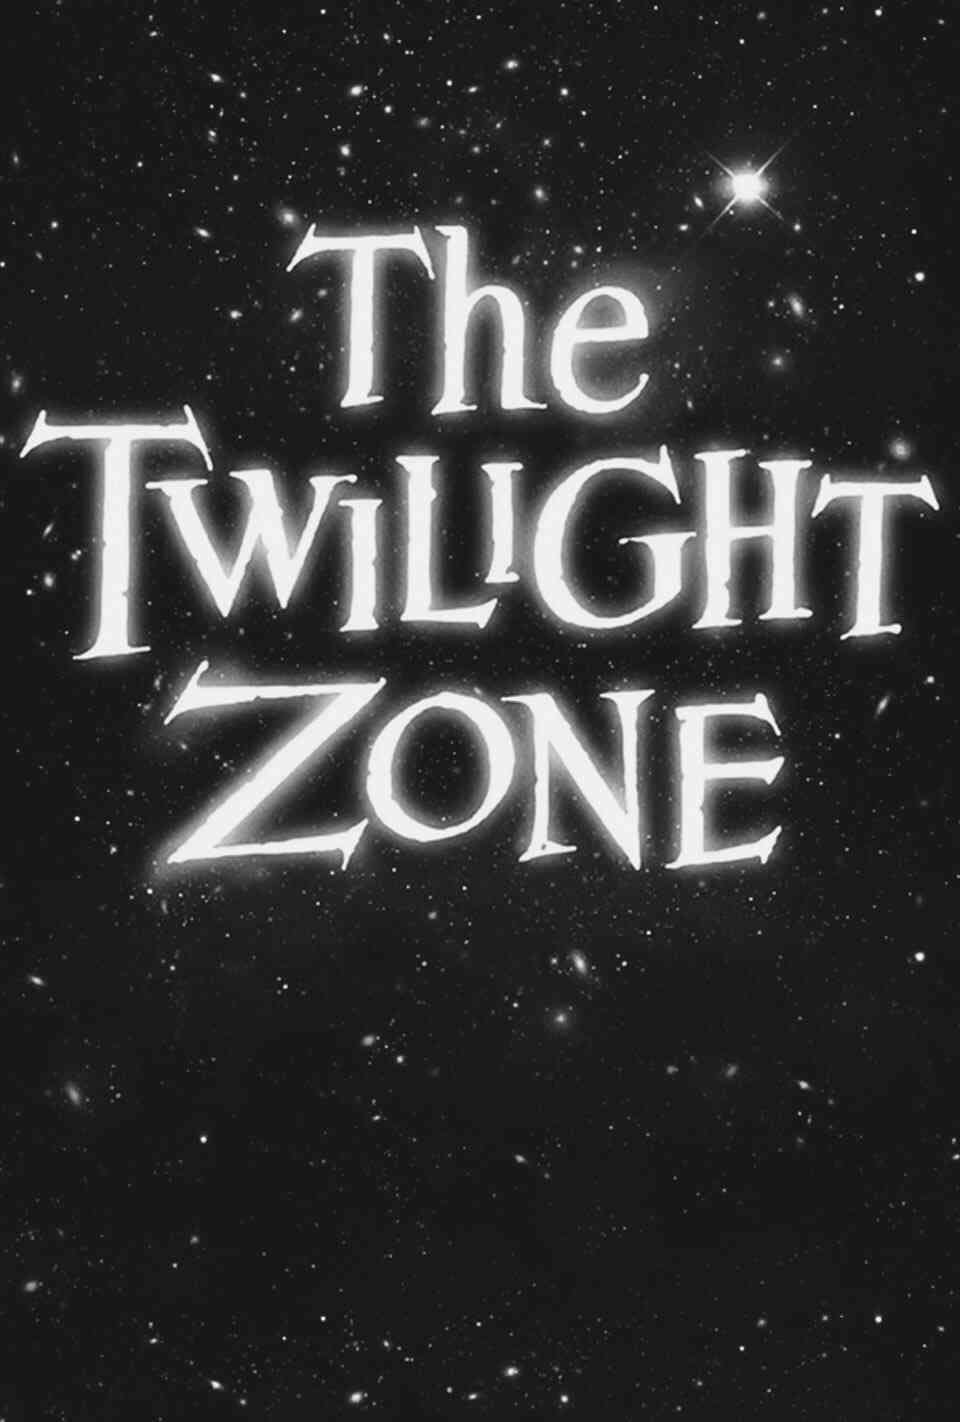 Read The Twilight Zone screenplay.